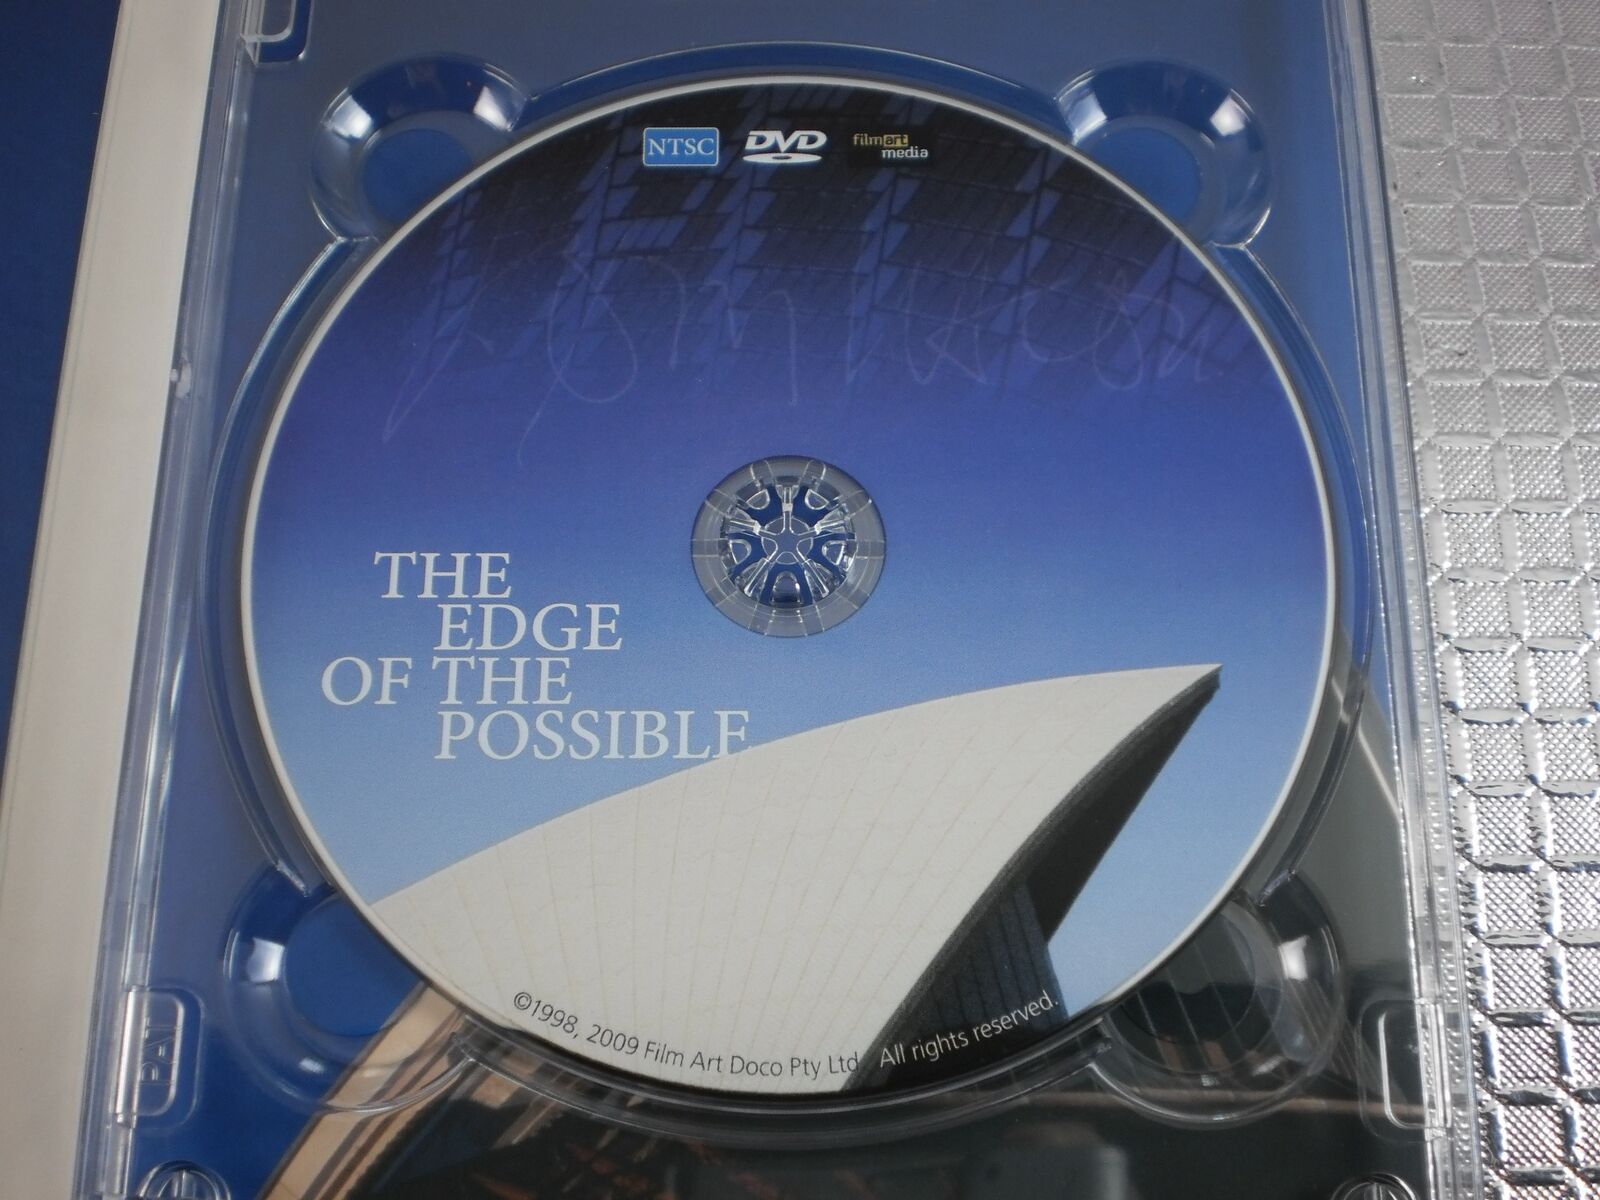 The Edge of the Possible DVD (Jorn Utzon, Daryl Dellora, Sue Maslin)